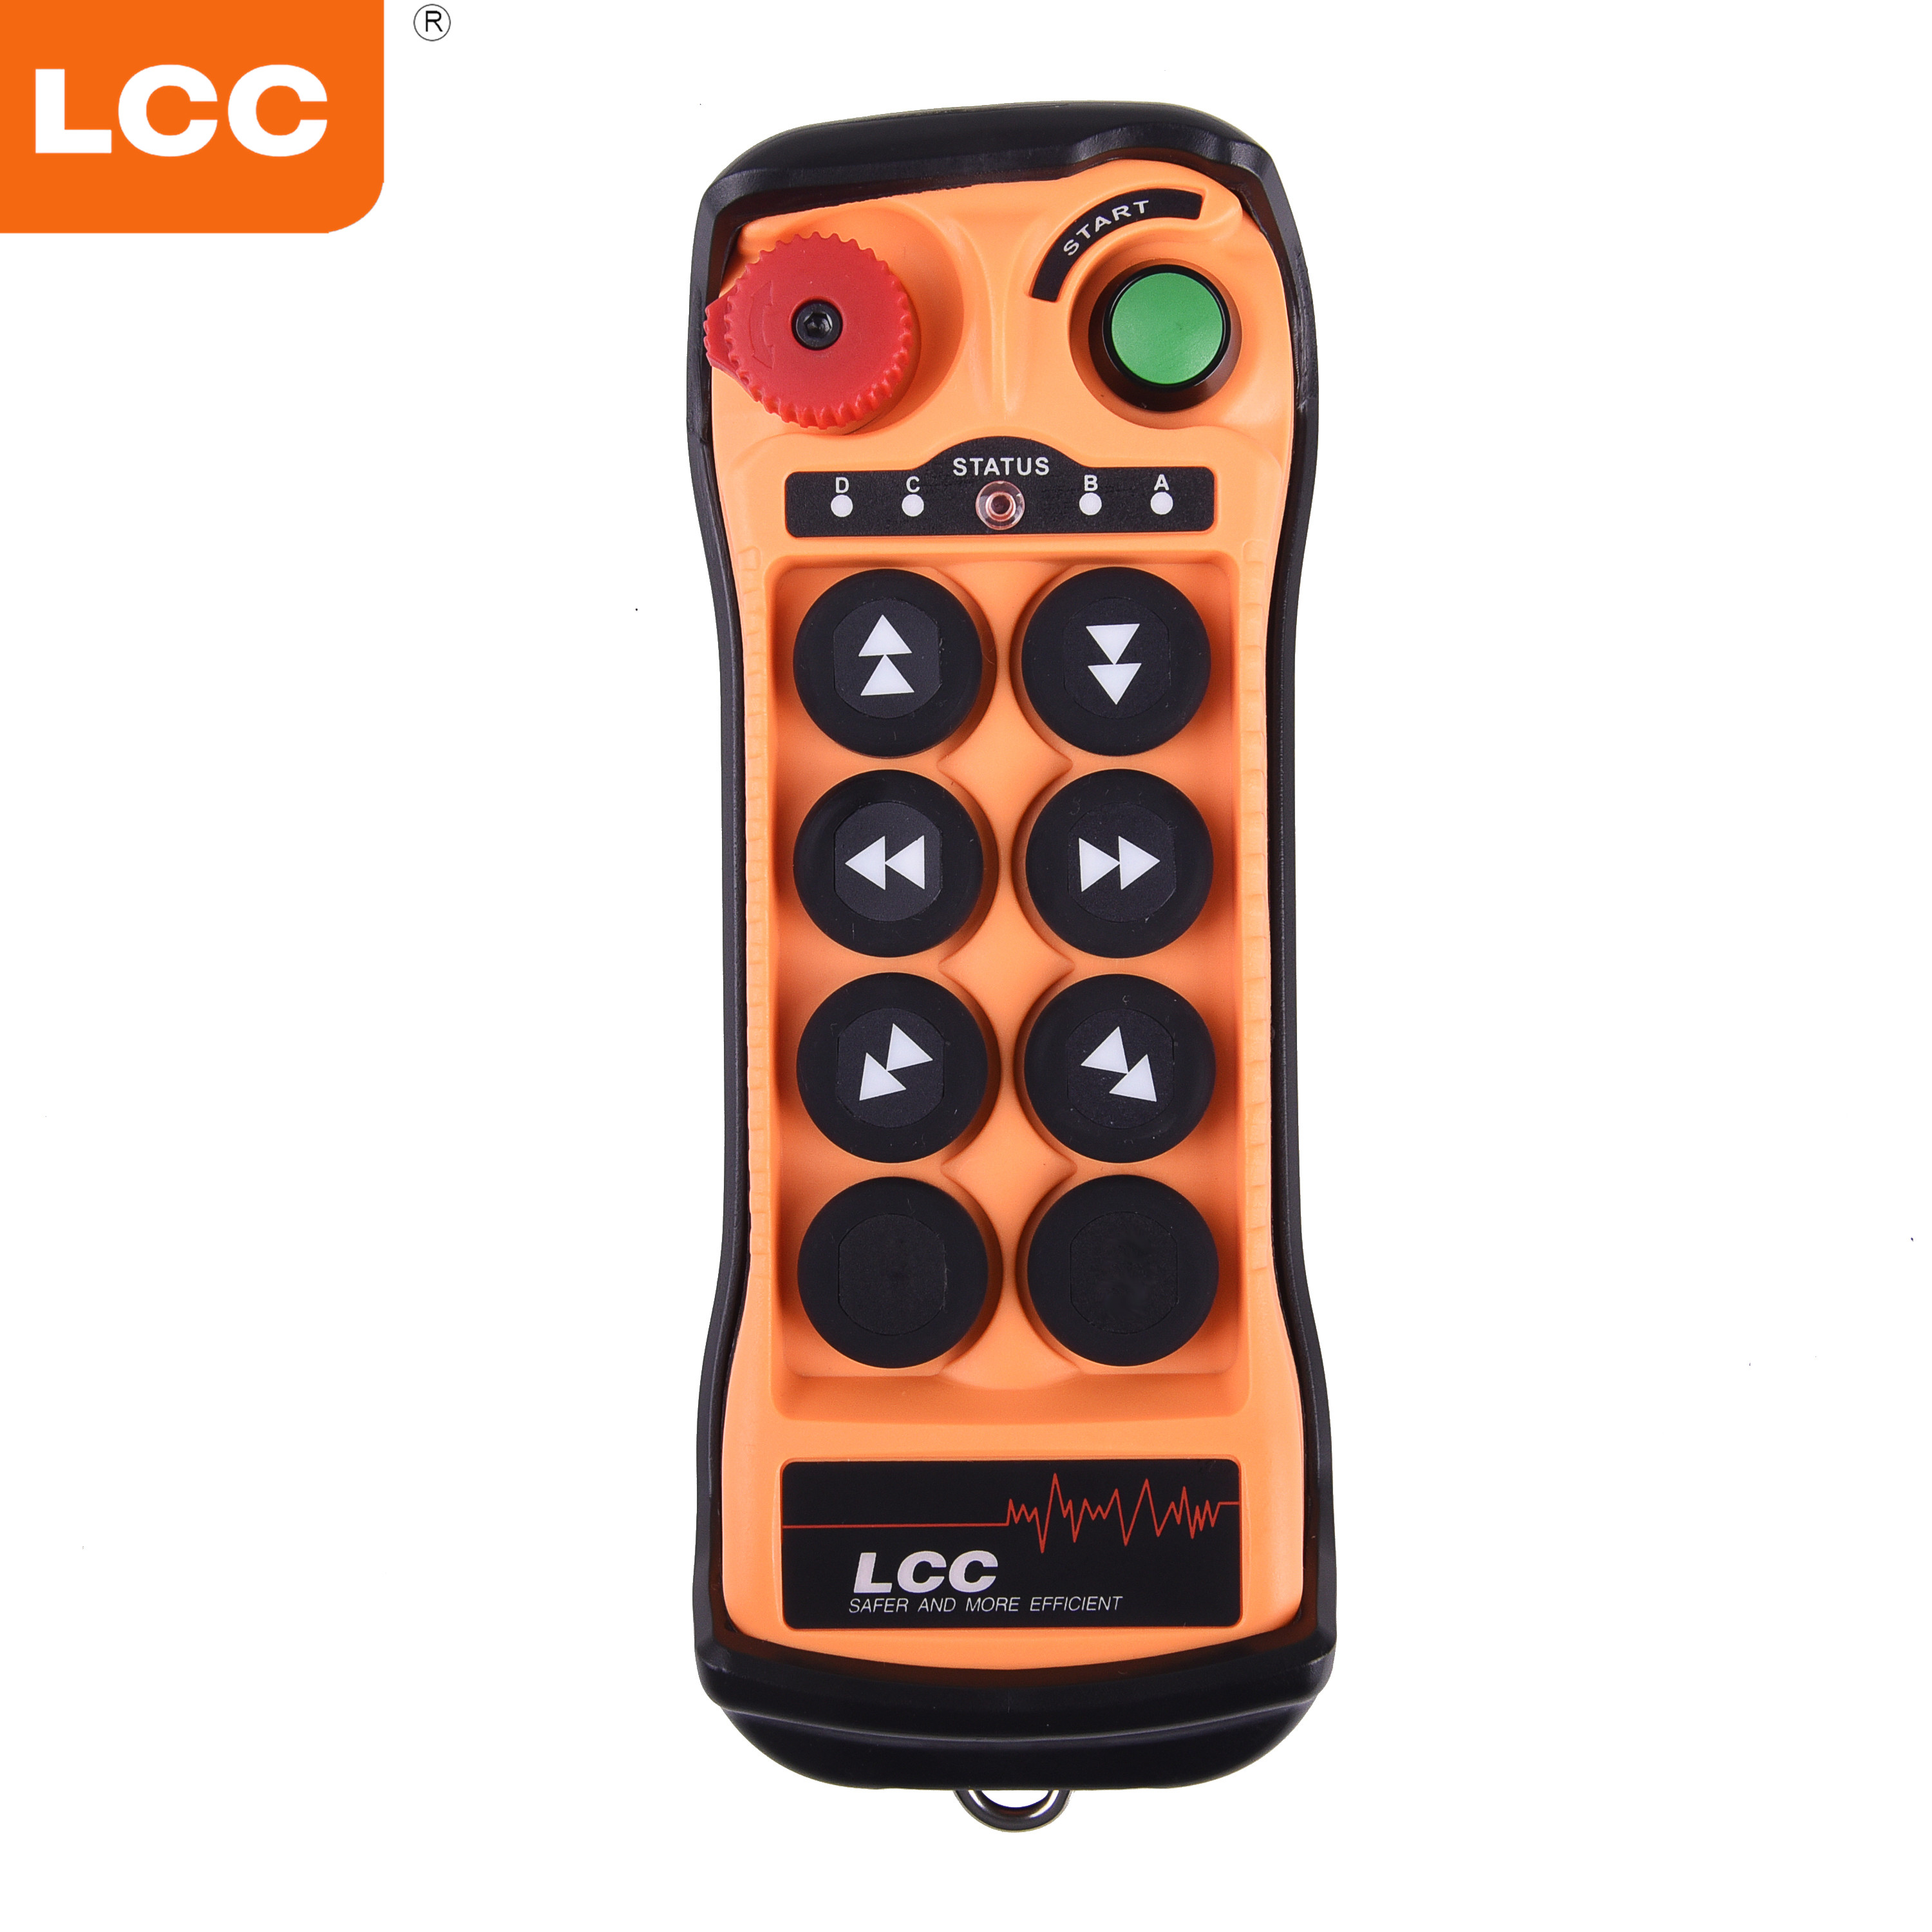 Q606 Wireless Electric Overhead Hoist Lifts Push Button Autec Radio Remote Control